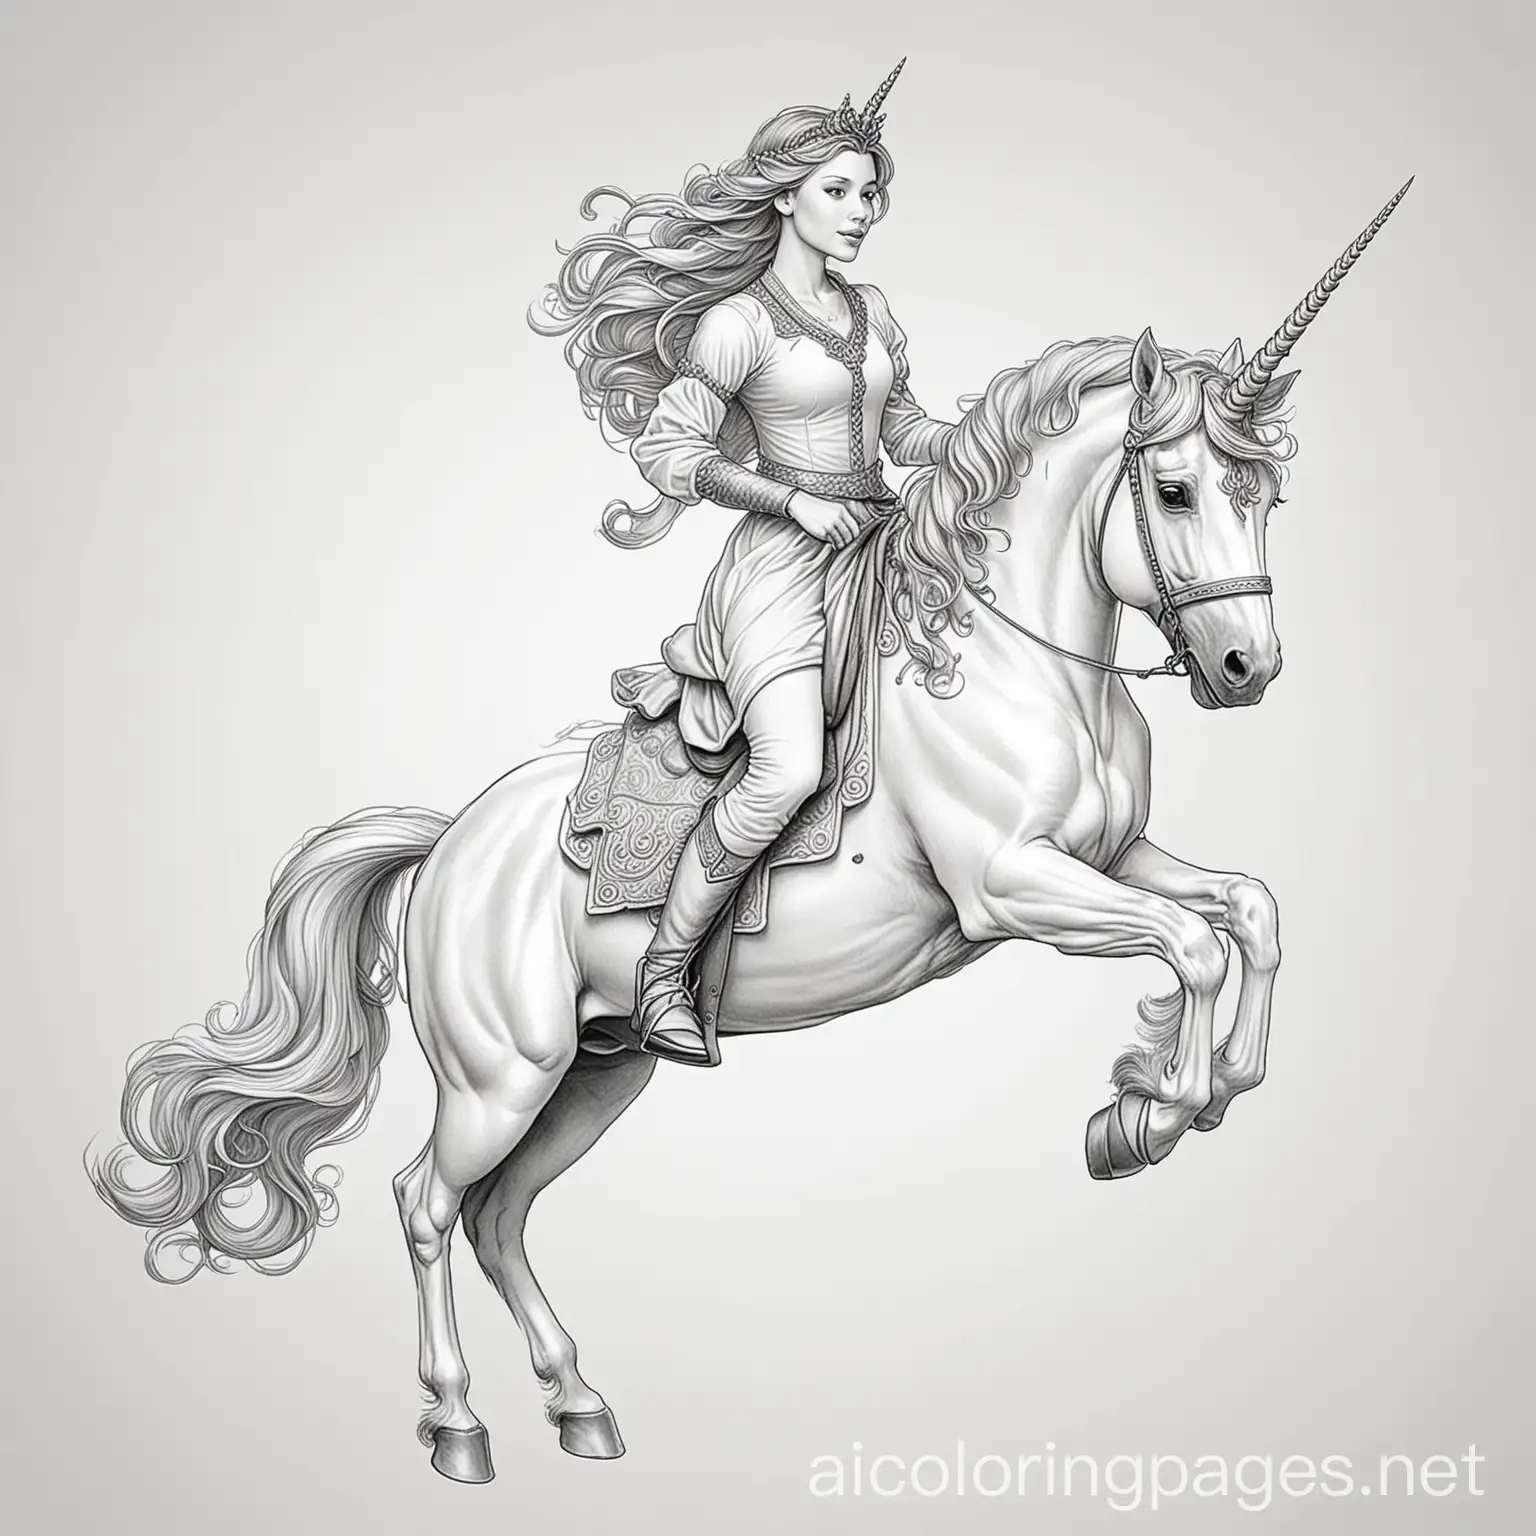 Princess-Riding-Majestic-Unicorn-Coloring-Page-Beautiful-Line-Art-on-White-Background